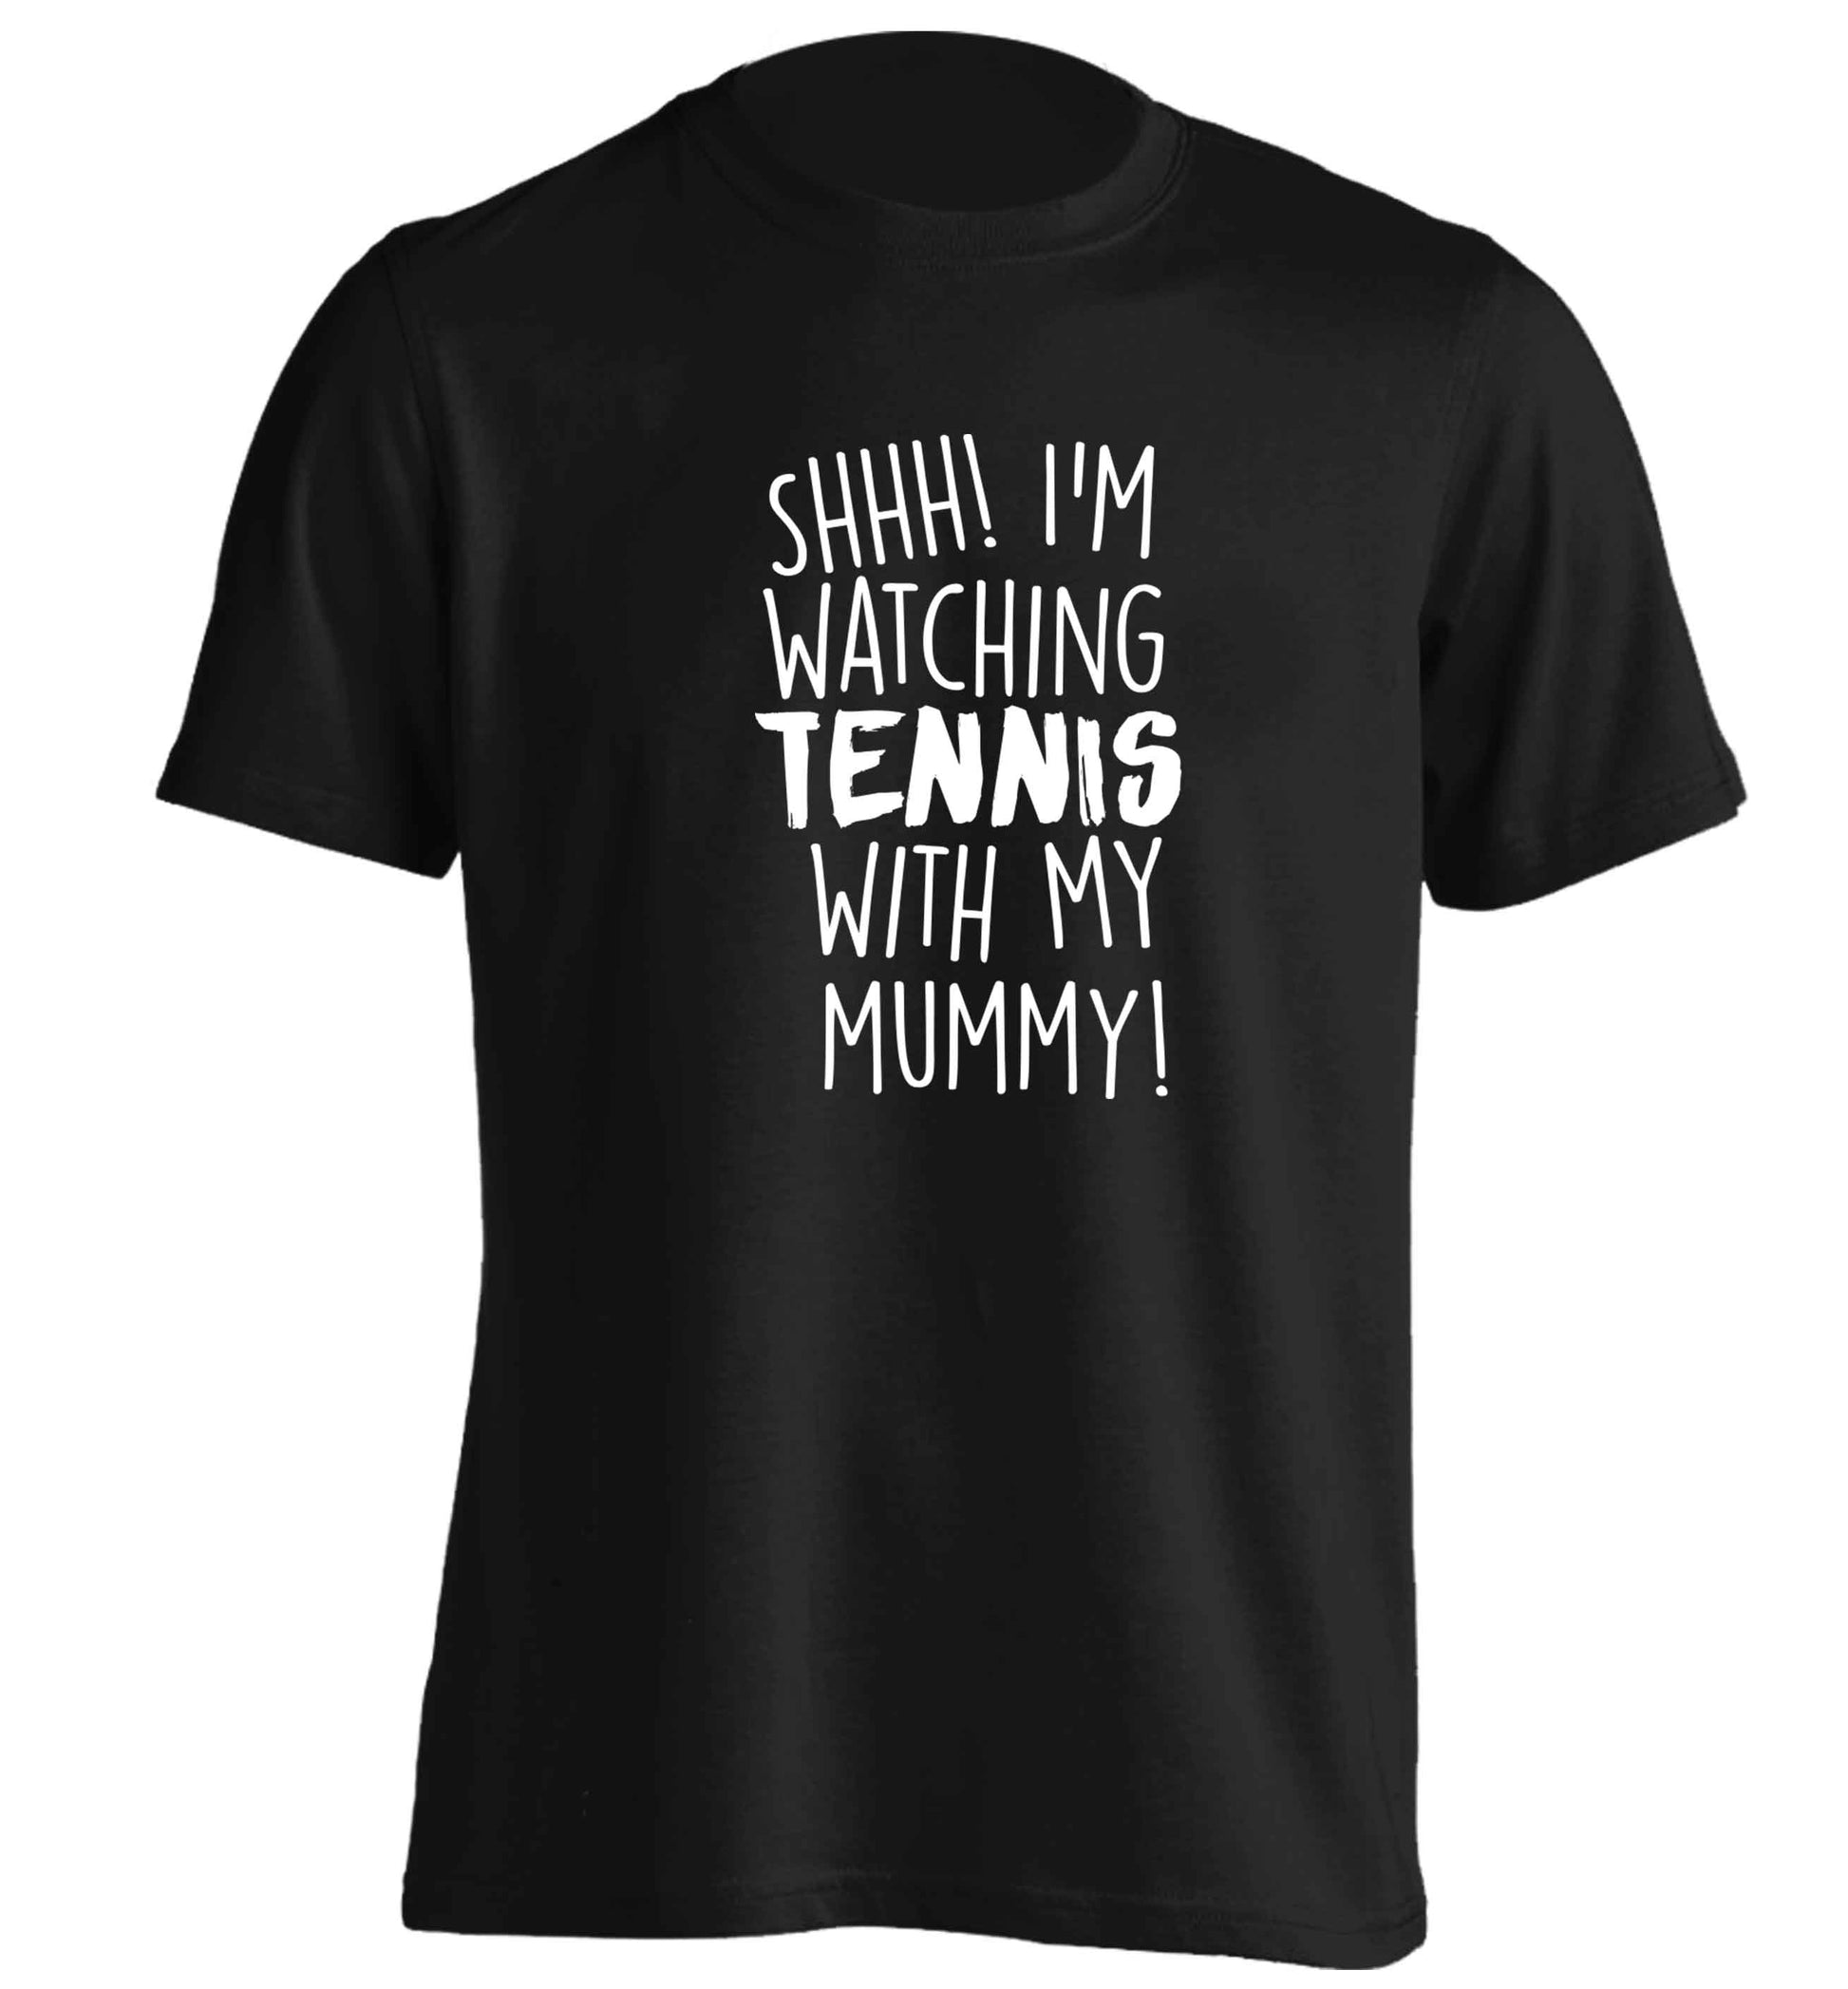 Shh! I'm watching tennis with my mummy! adults unisex black Tshirt 2XL